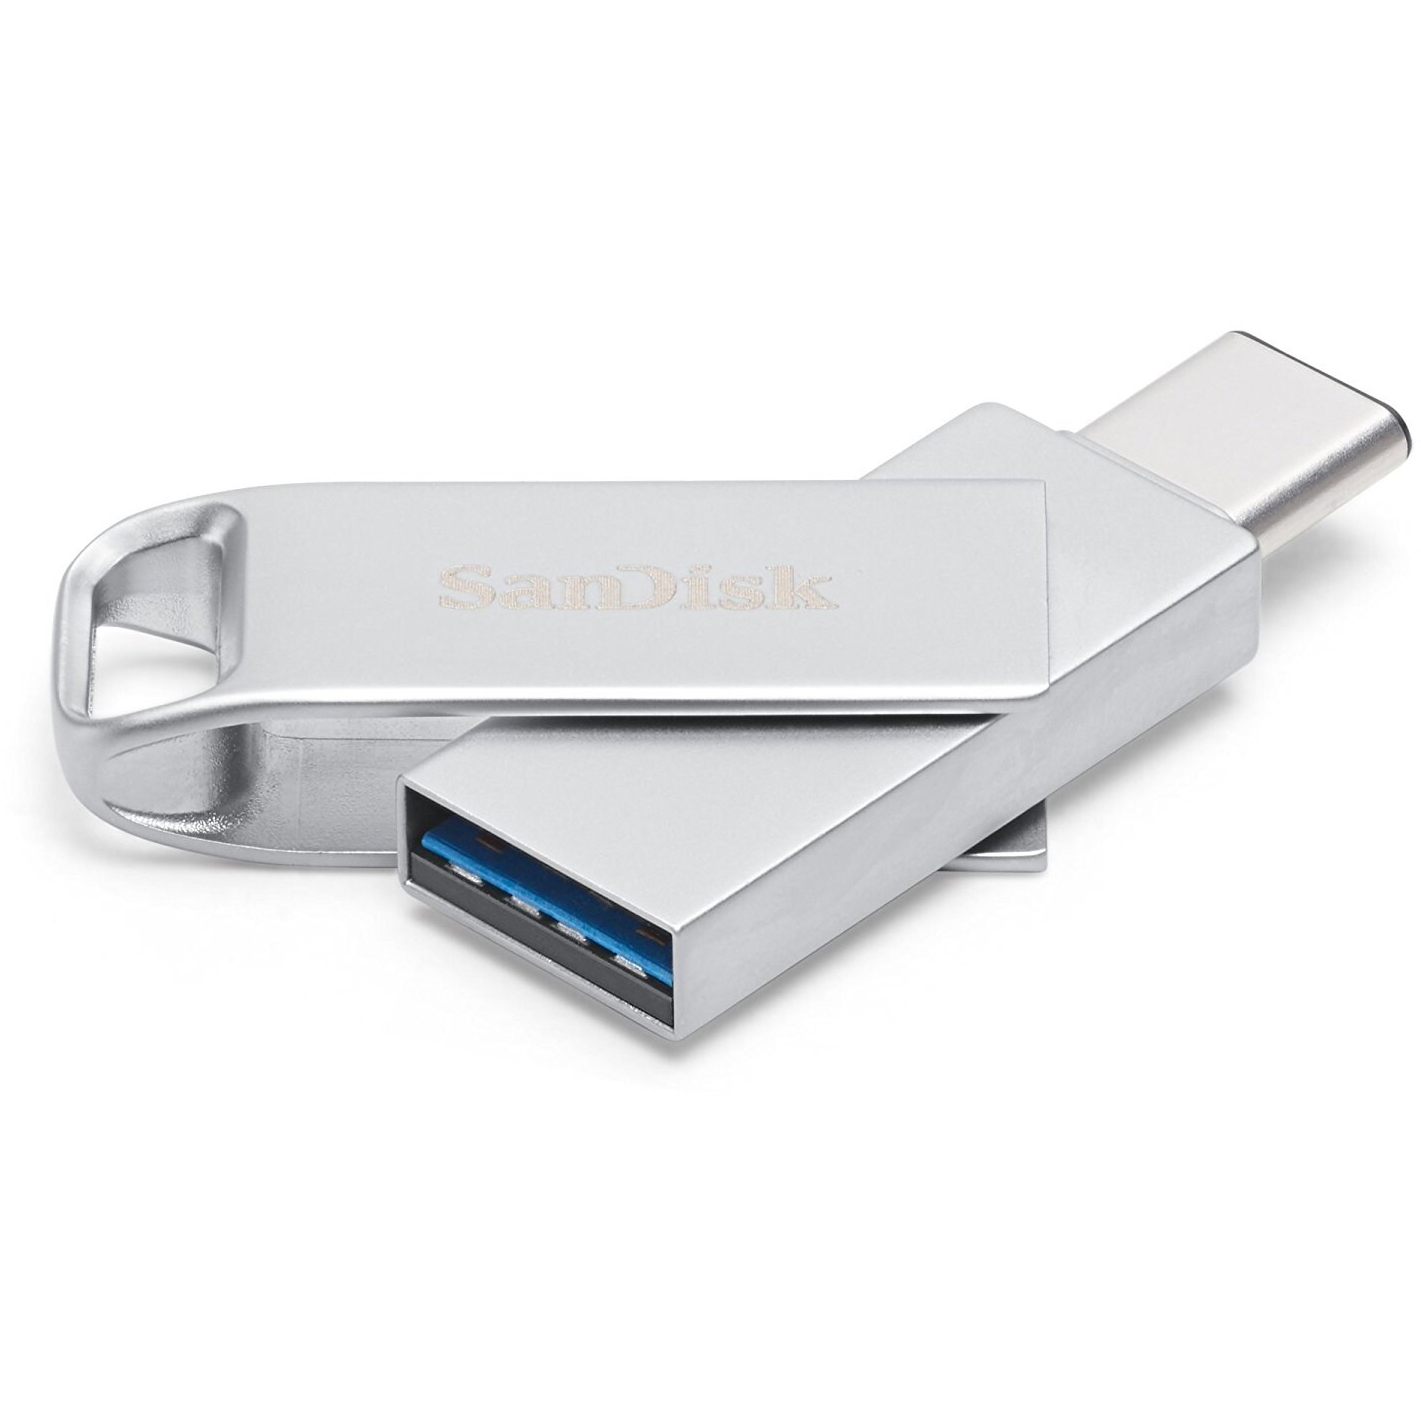 MEMORIA USB SANDISK ULTRA DUAL DRIVE M 3.0 64GB